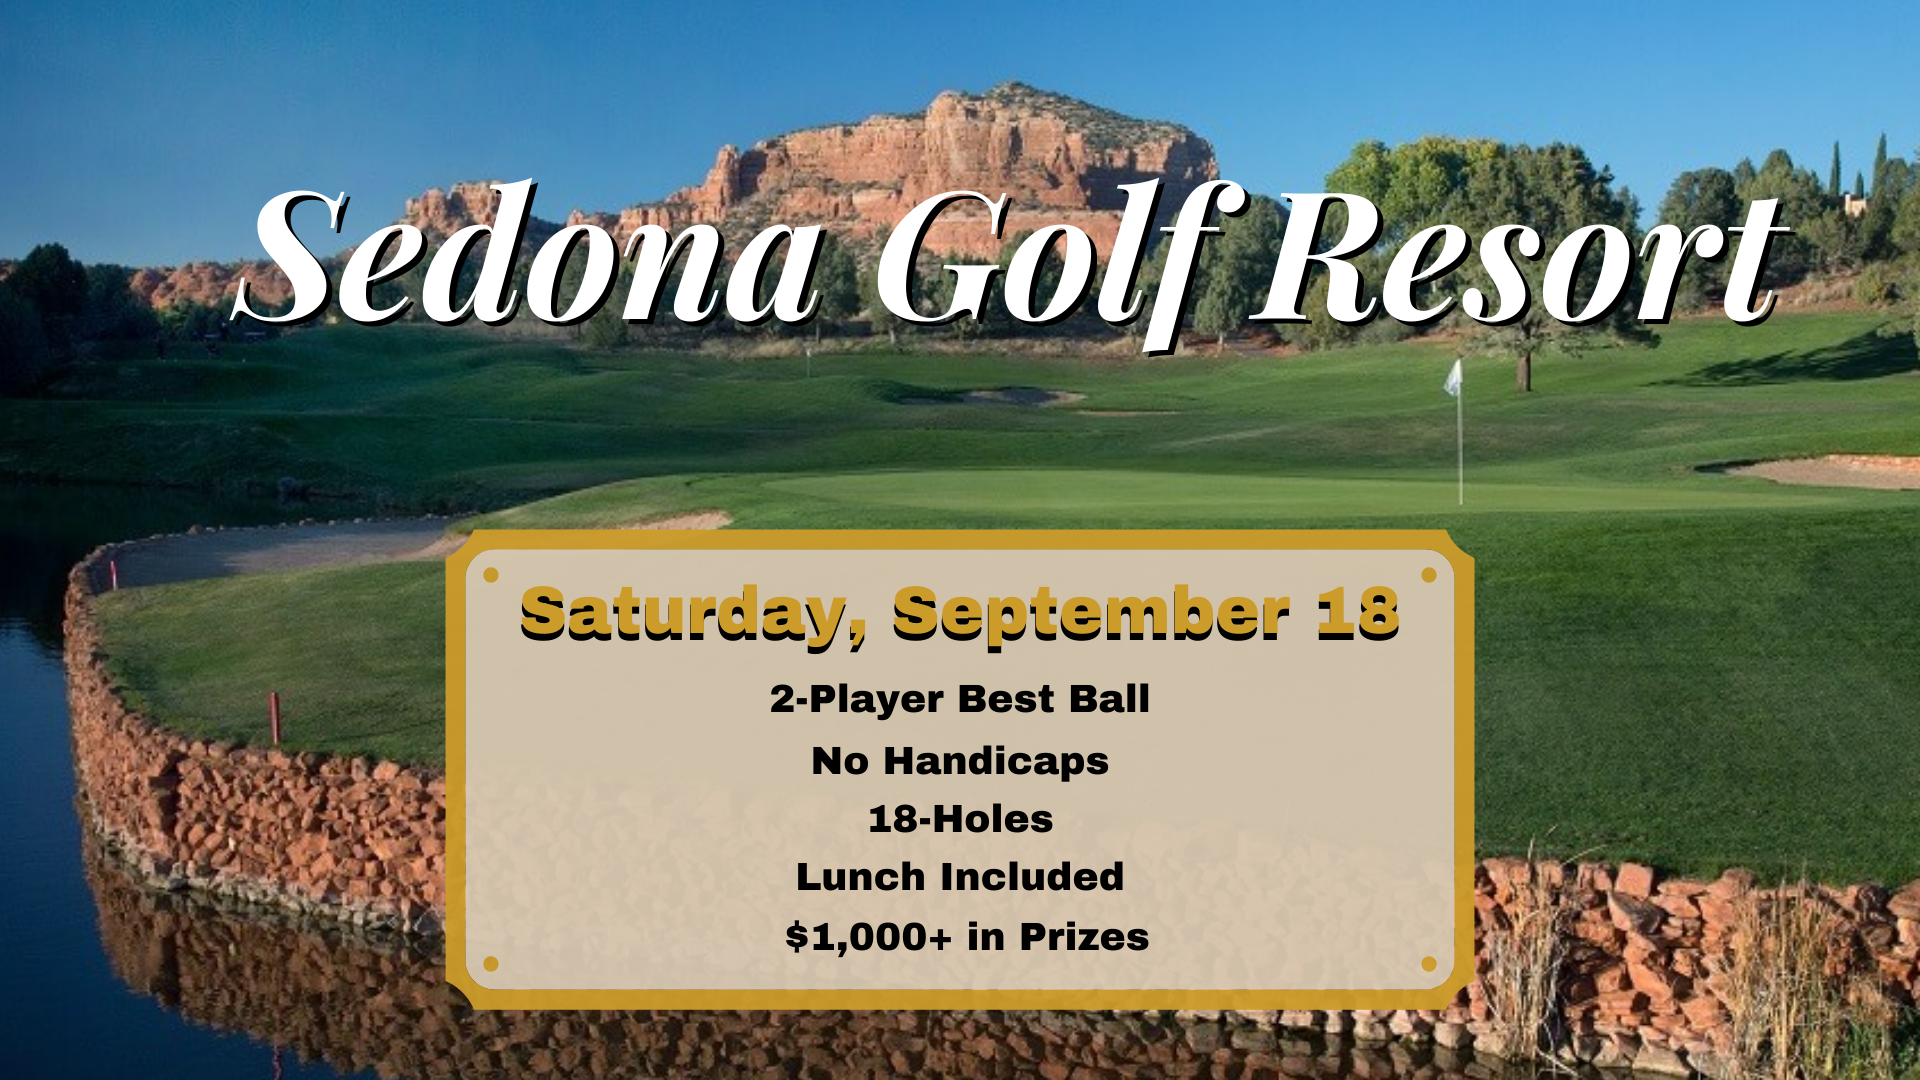 Sedona Golf Resort tournament